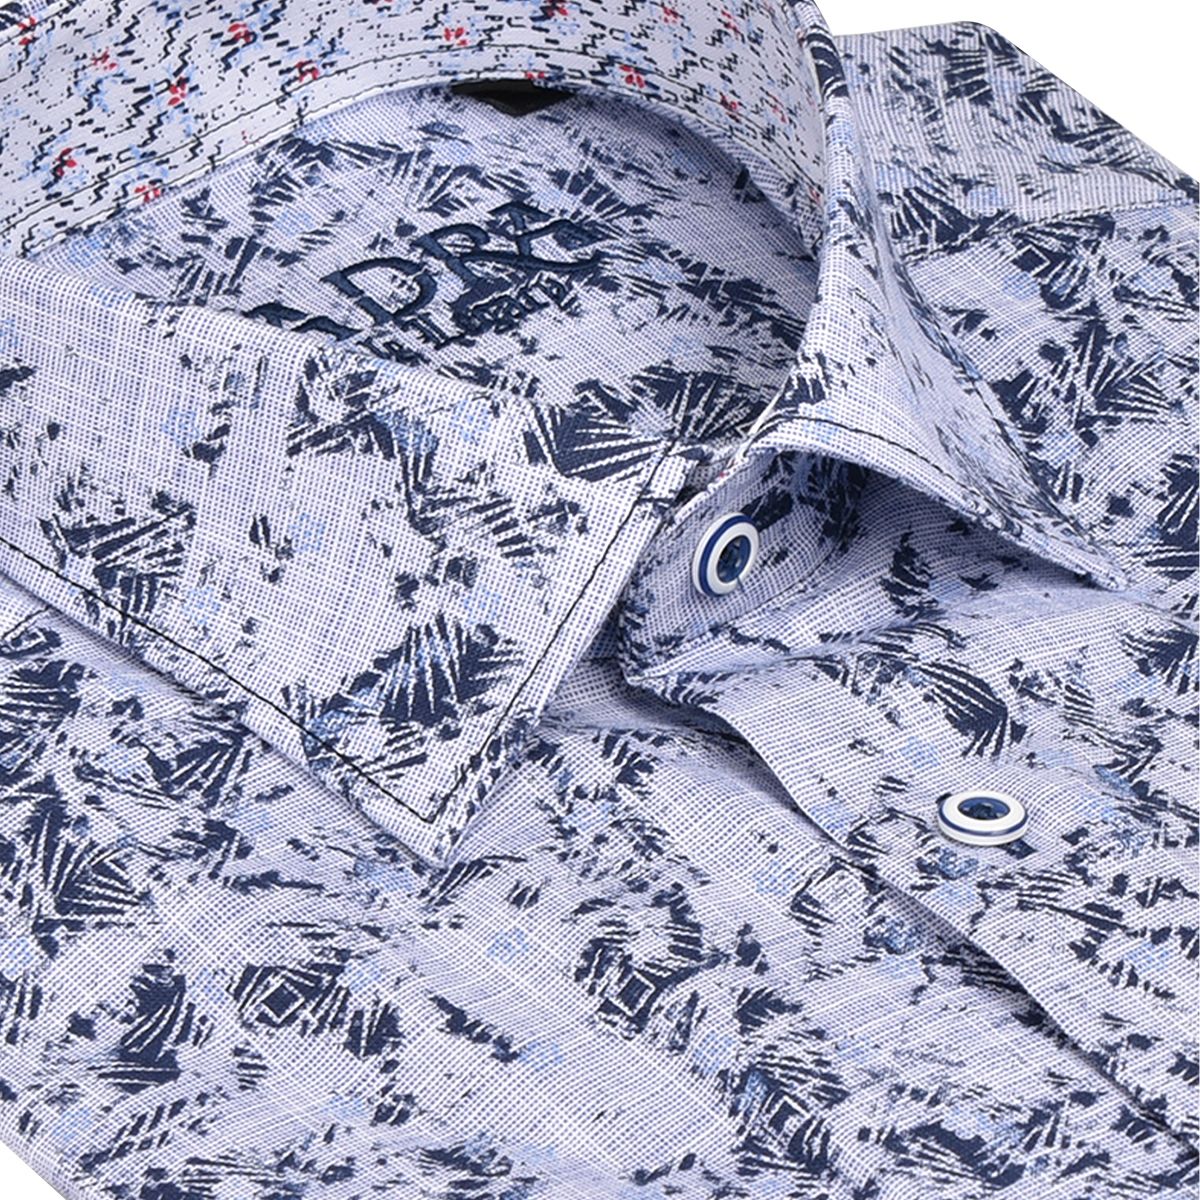 CM0W477 - Cuadra indigo fashion casual washed linen abstract shirt for men-CUADRA-Kuet-Cuadra-Boots